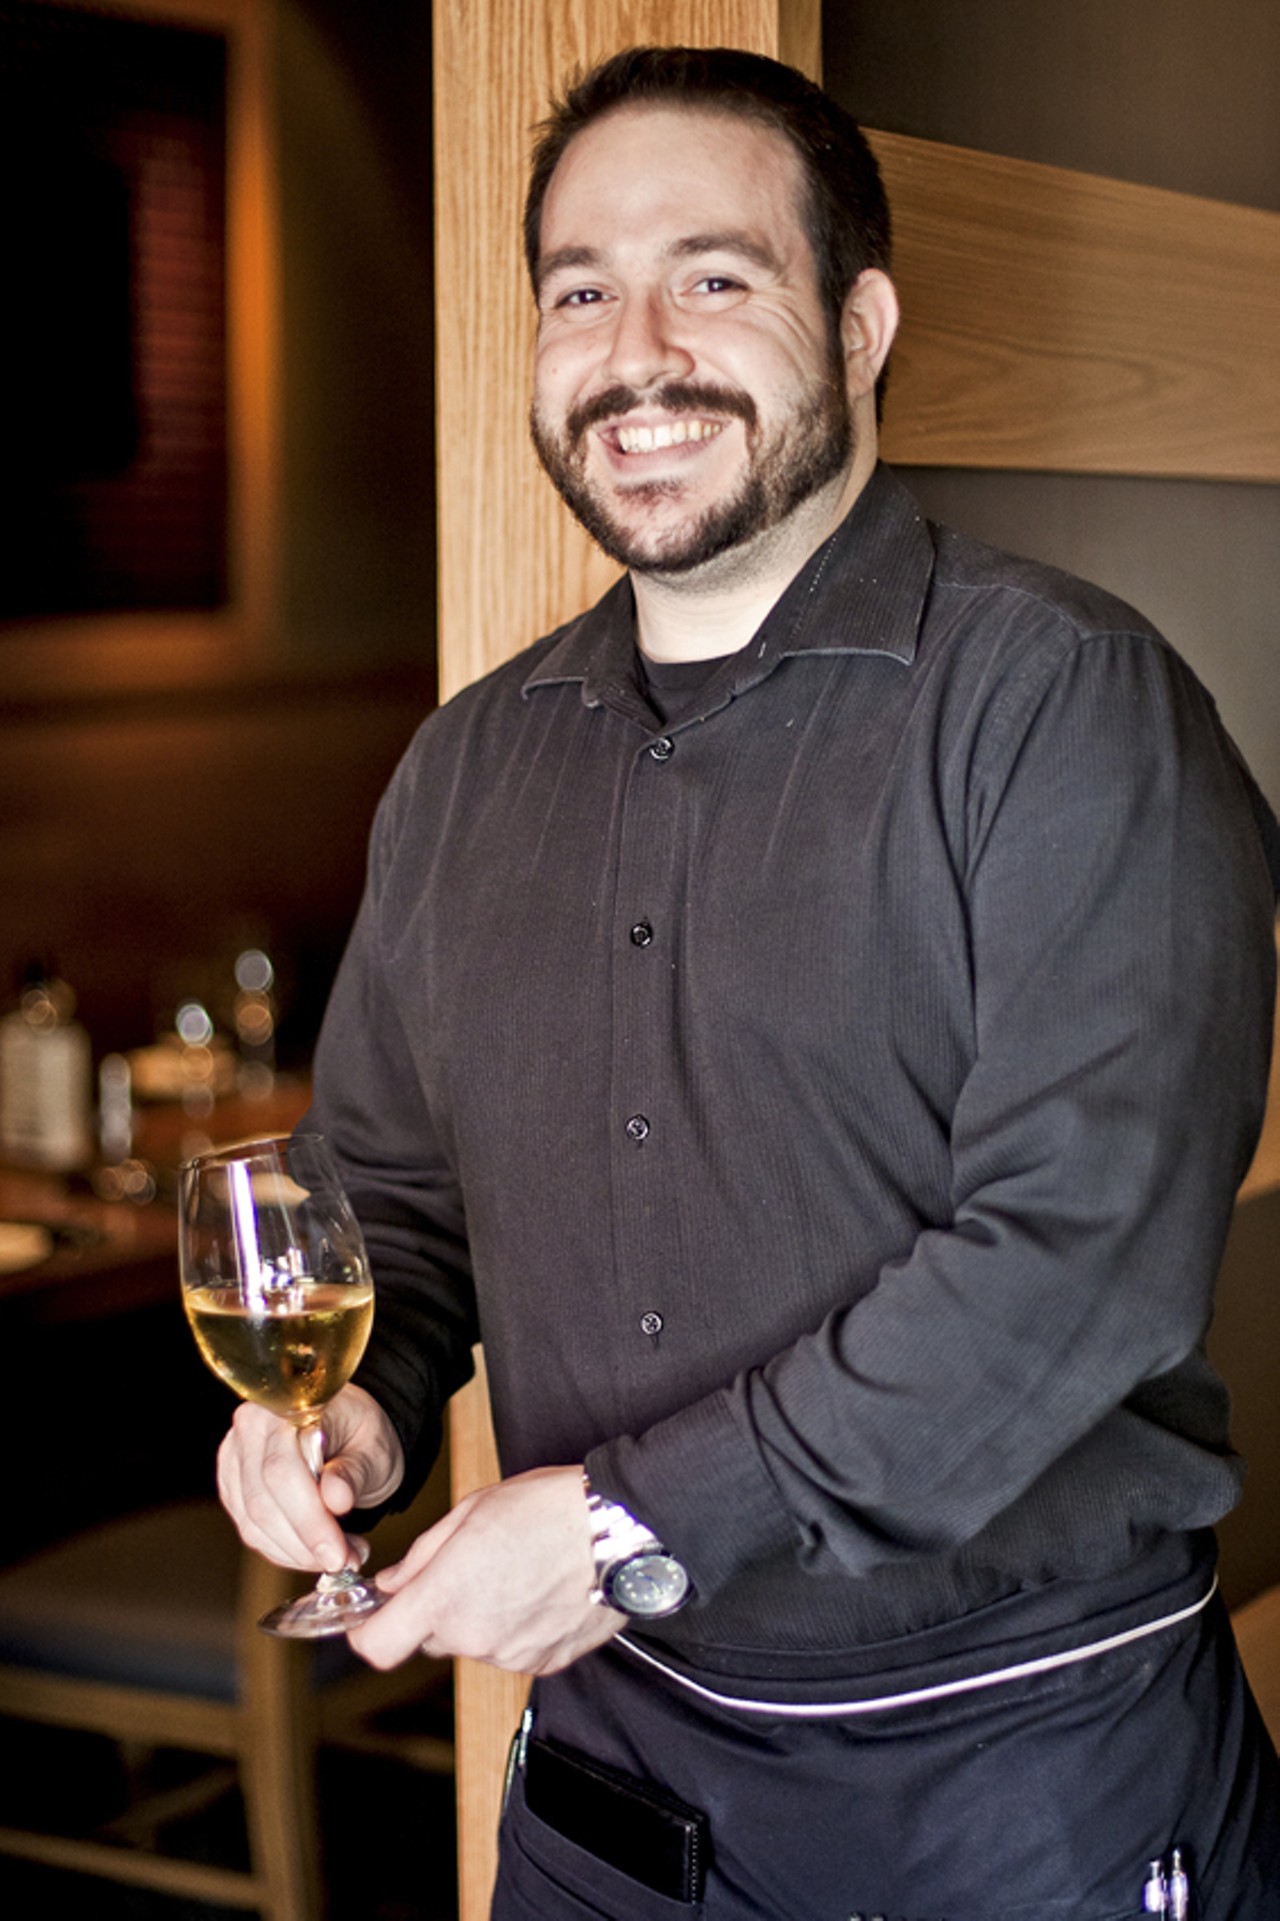 Ben Sabol, one of the servers at J. Gilbert's.